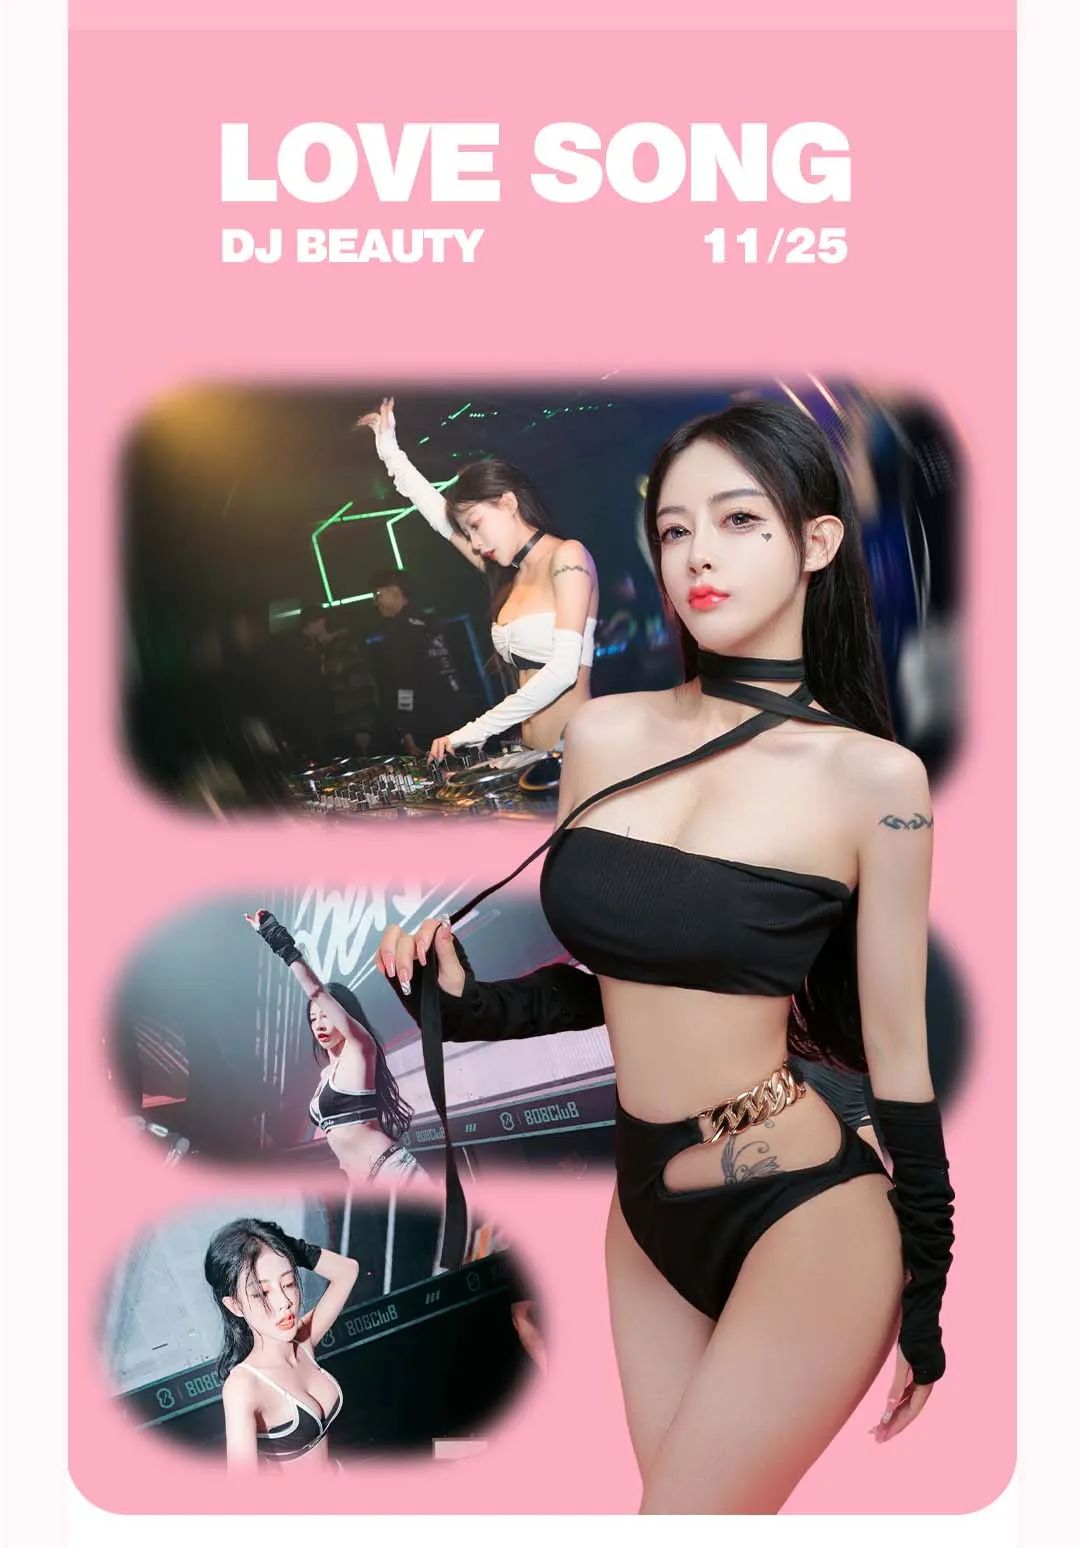 L.S.J.N | 11/25 DJ BEAUTY有她的现场连空气都是甜的-济南LS酒吧/LOVE SONG CLUB